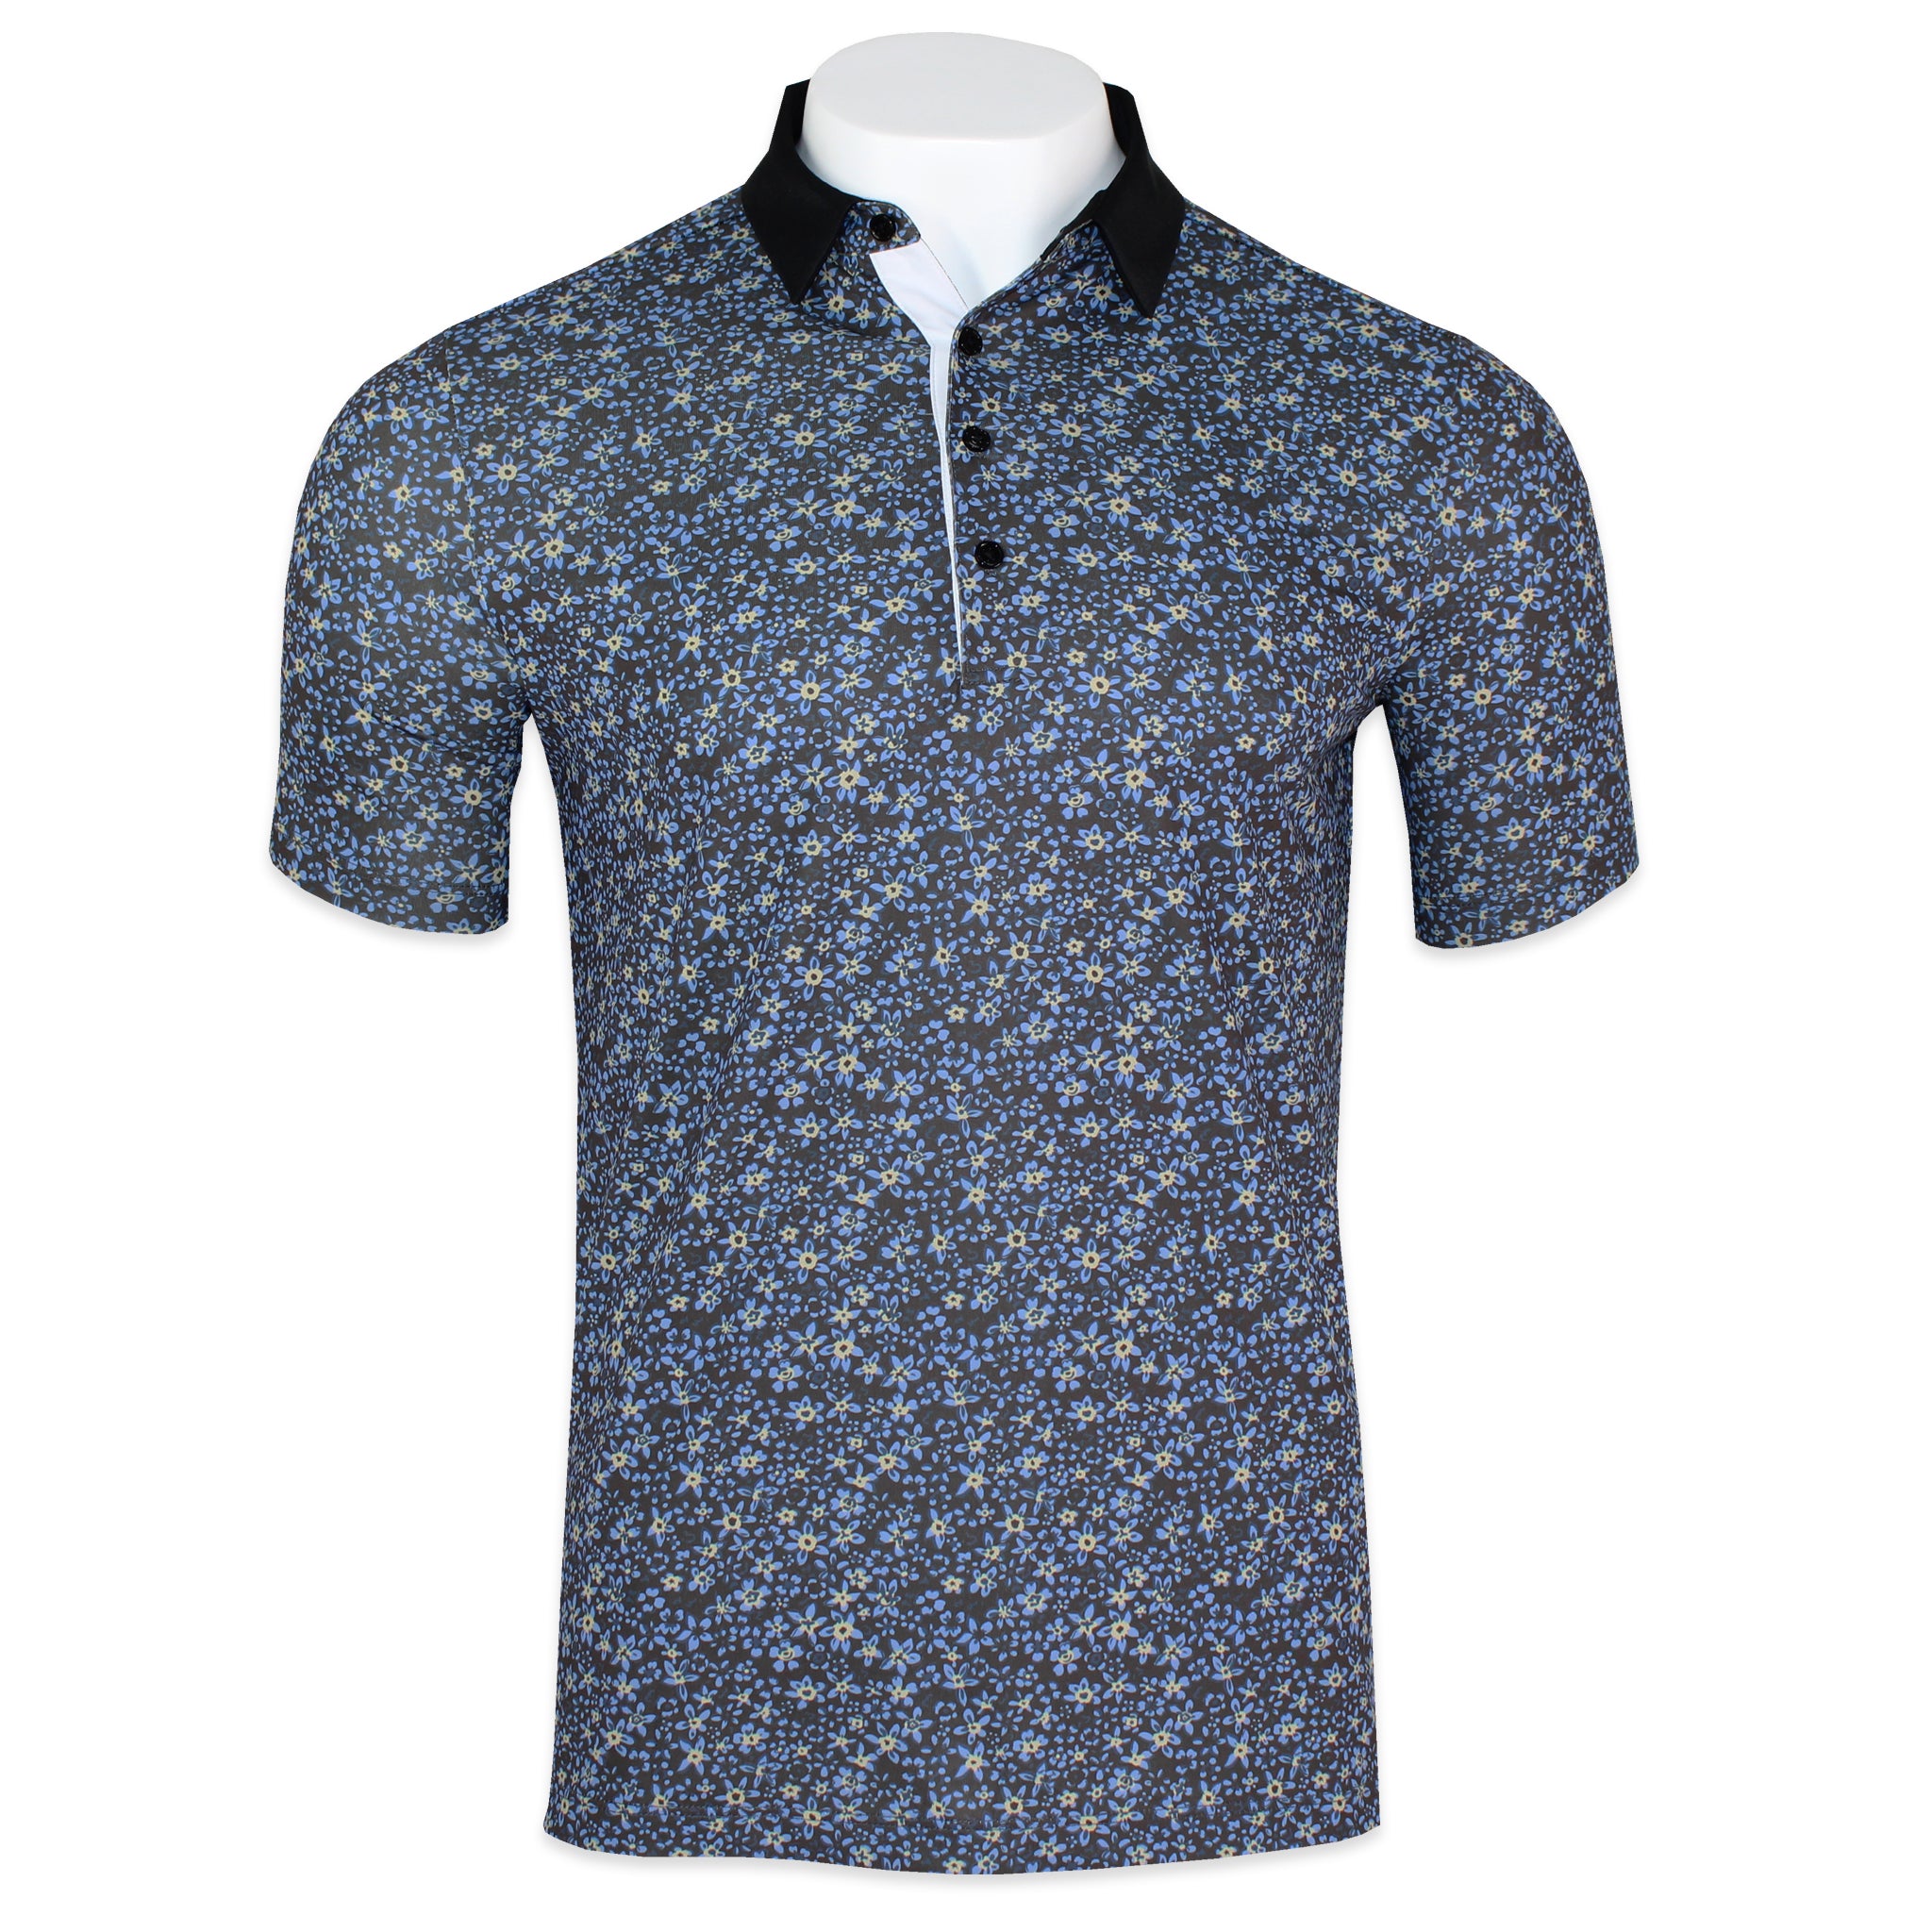 'The Cody' Four Button Golf Shirt